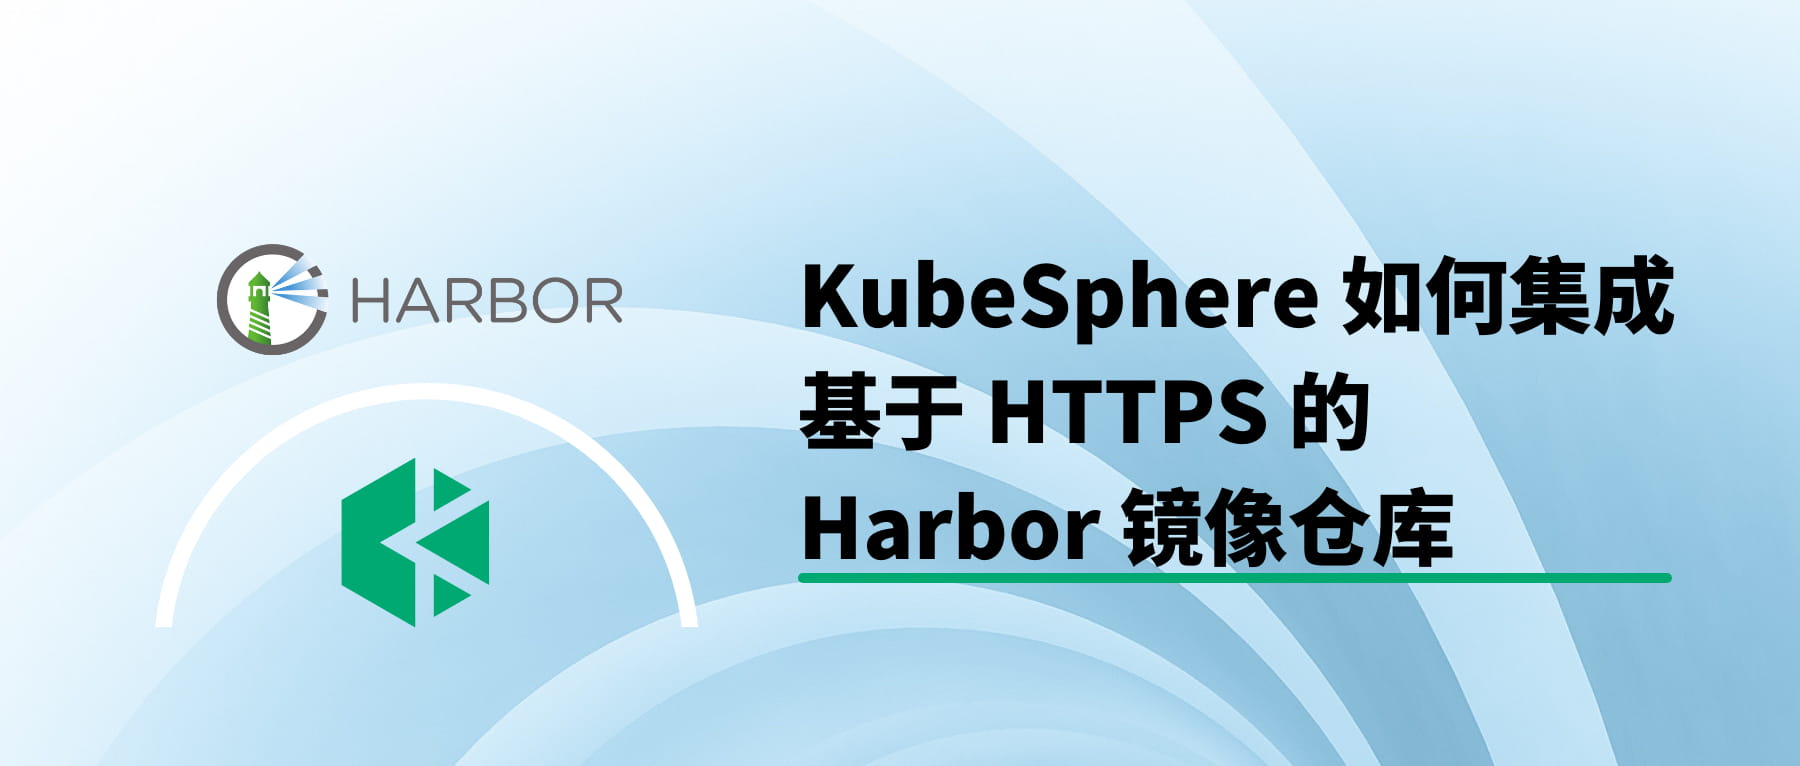 KubeSphere 使用 HTTPS 协议集成 Harbor 镜像仓库指南